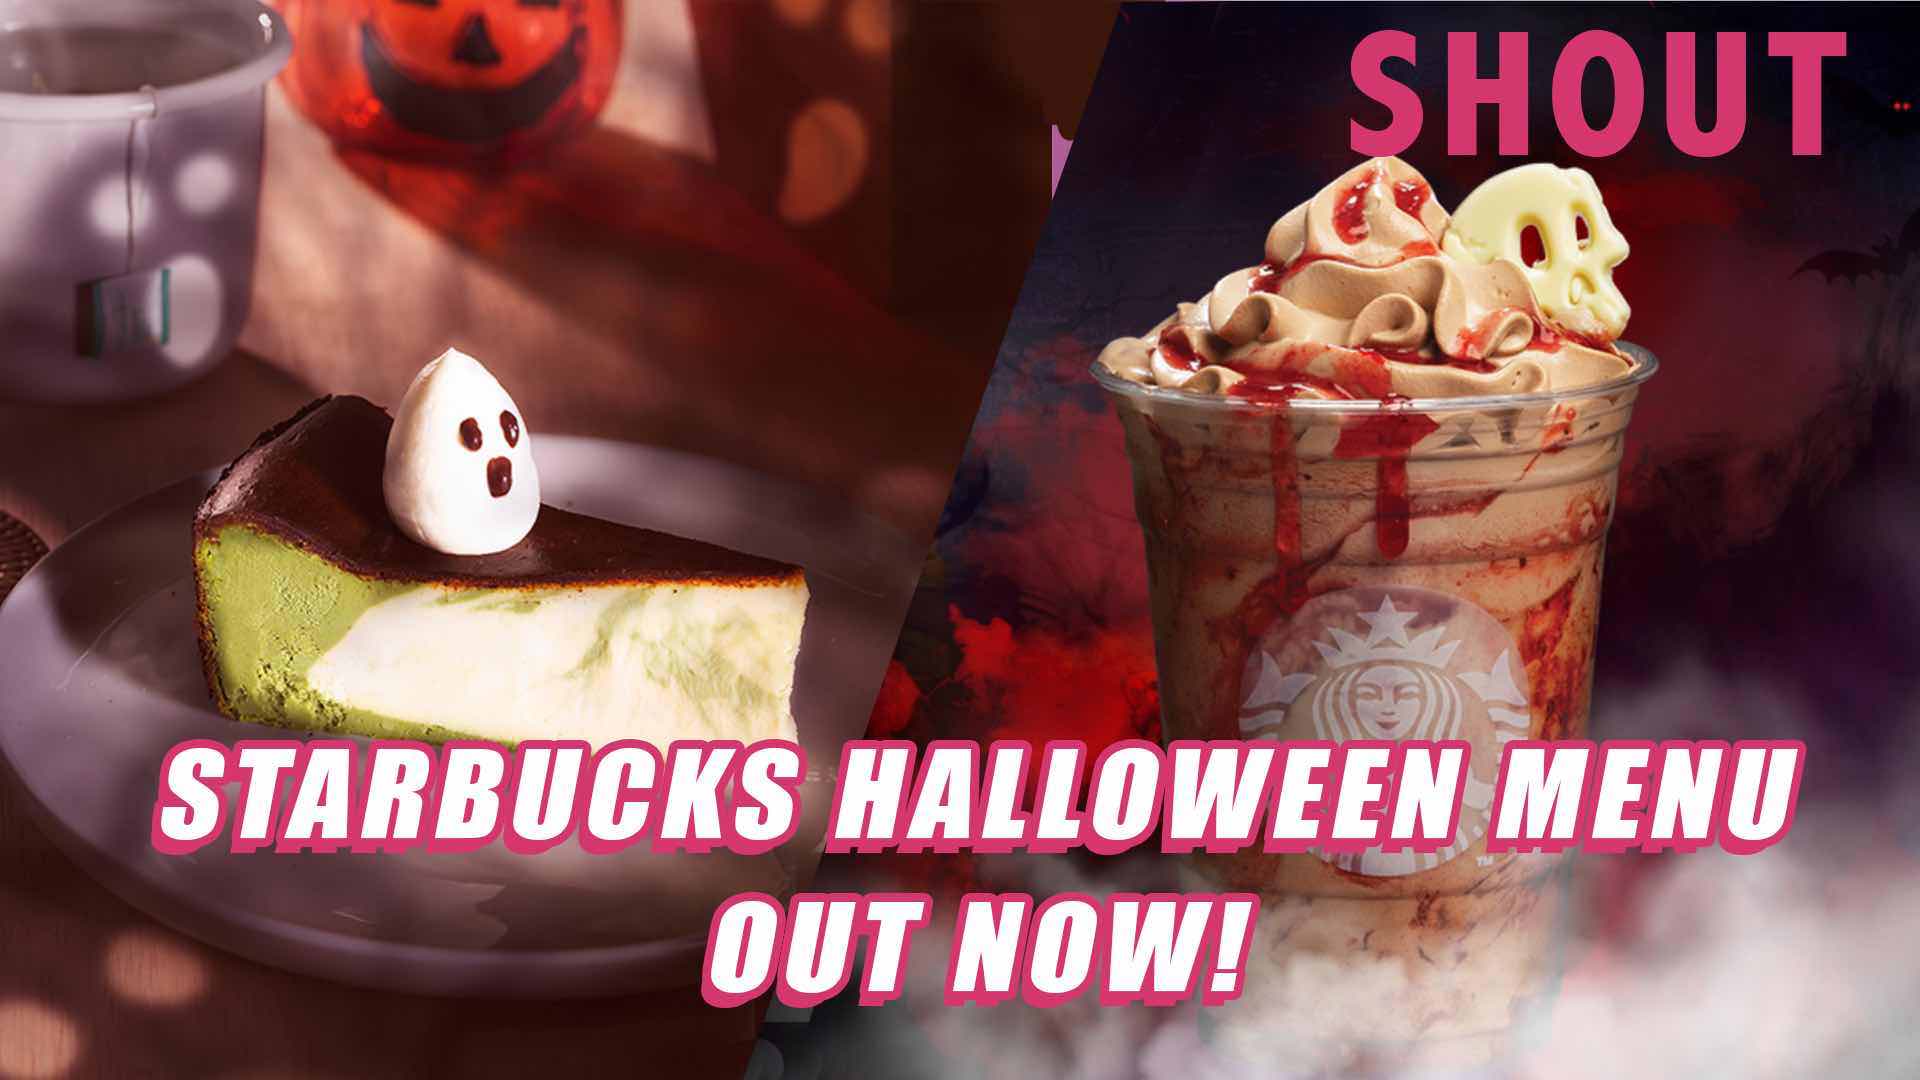 Starbucks Brings Back Spooktacular Halloween Menu! Shout